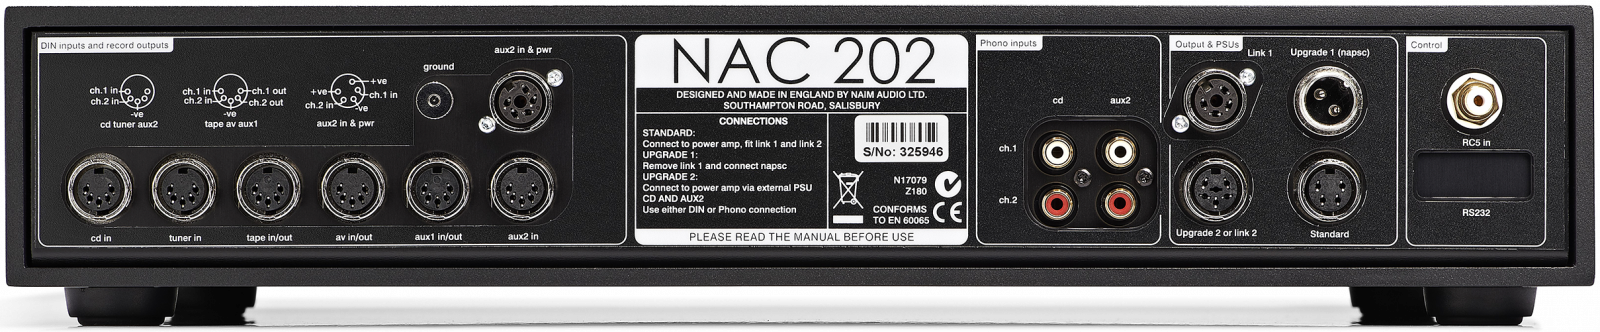 nac202_rear1.png